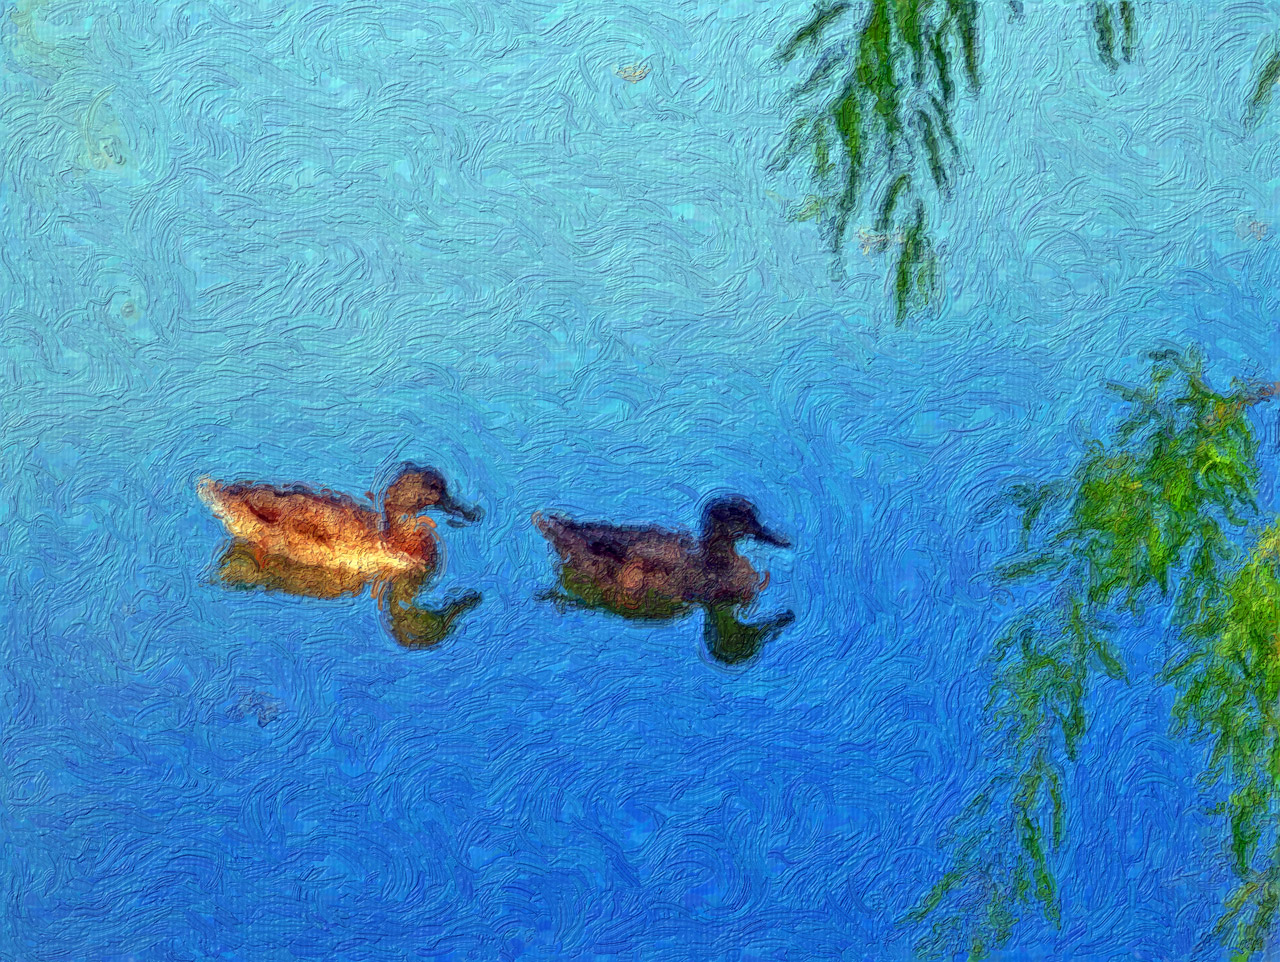 ducks pond painting free photo